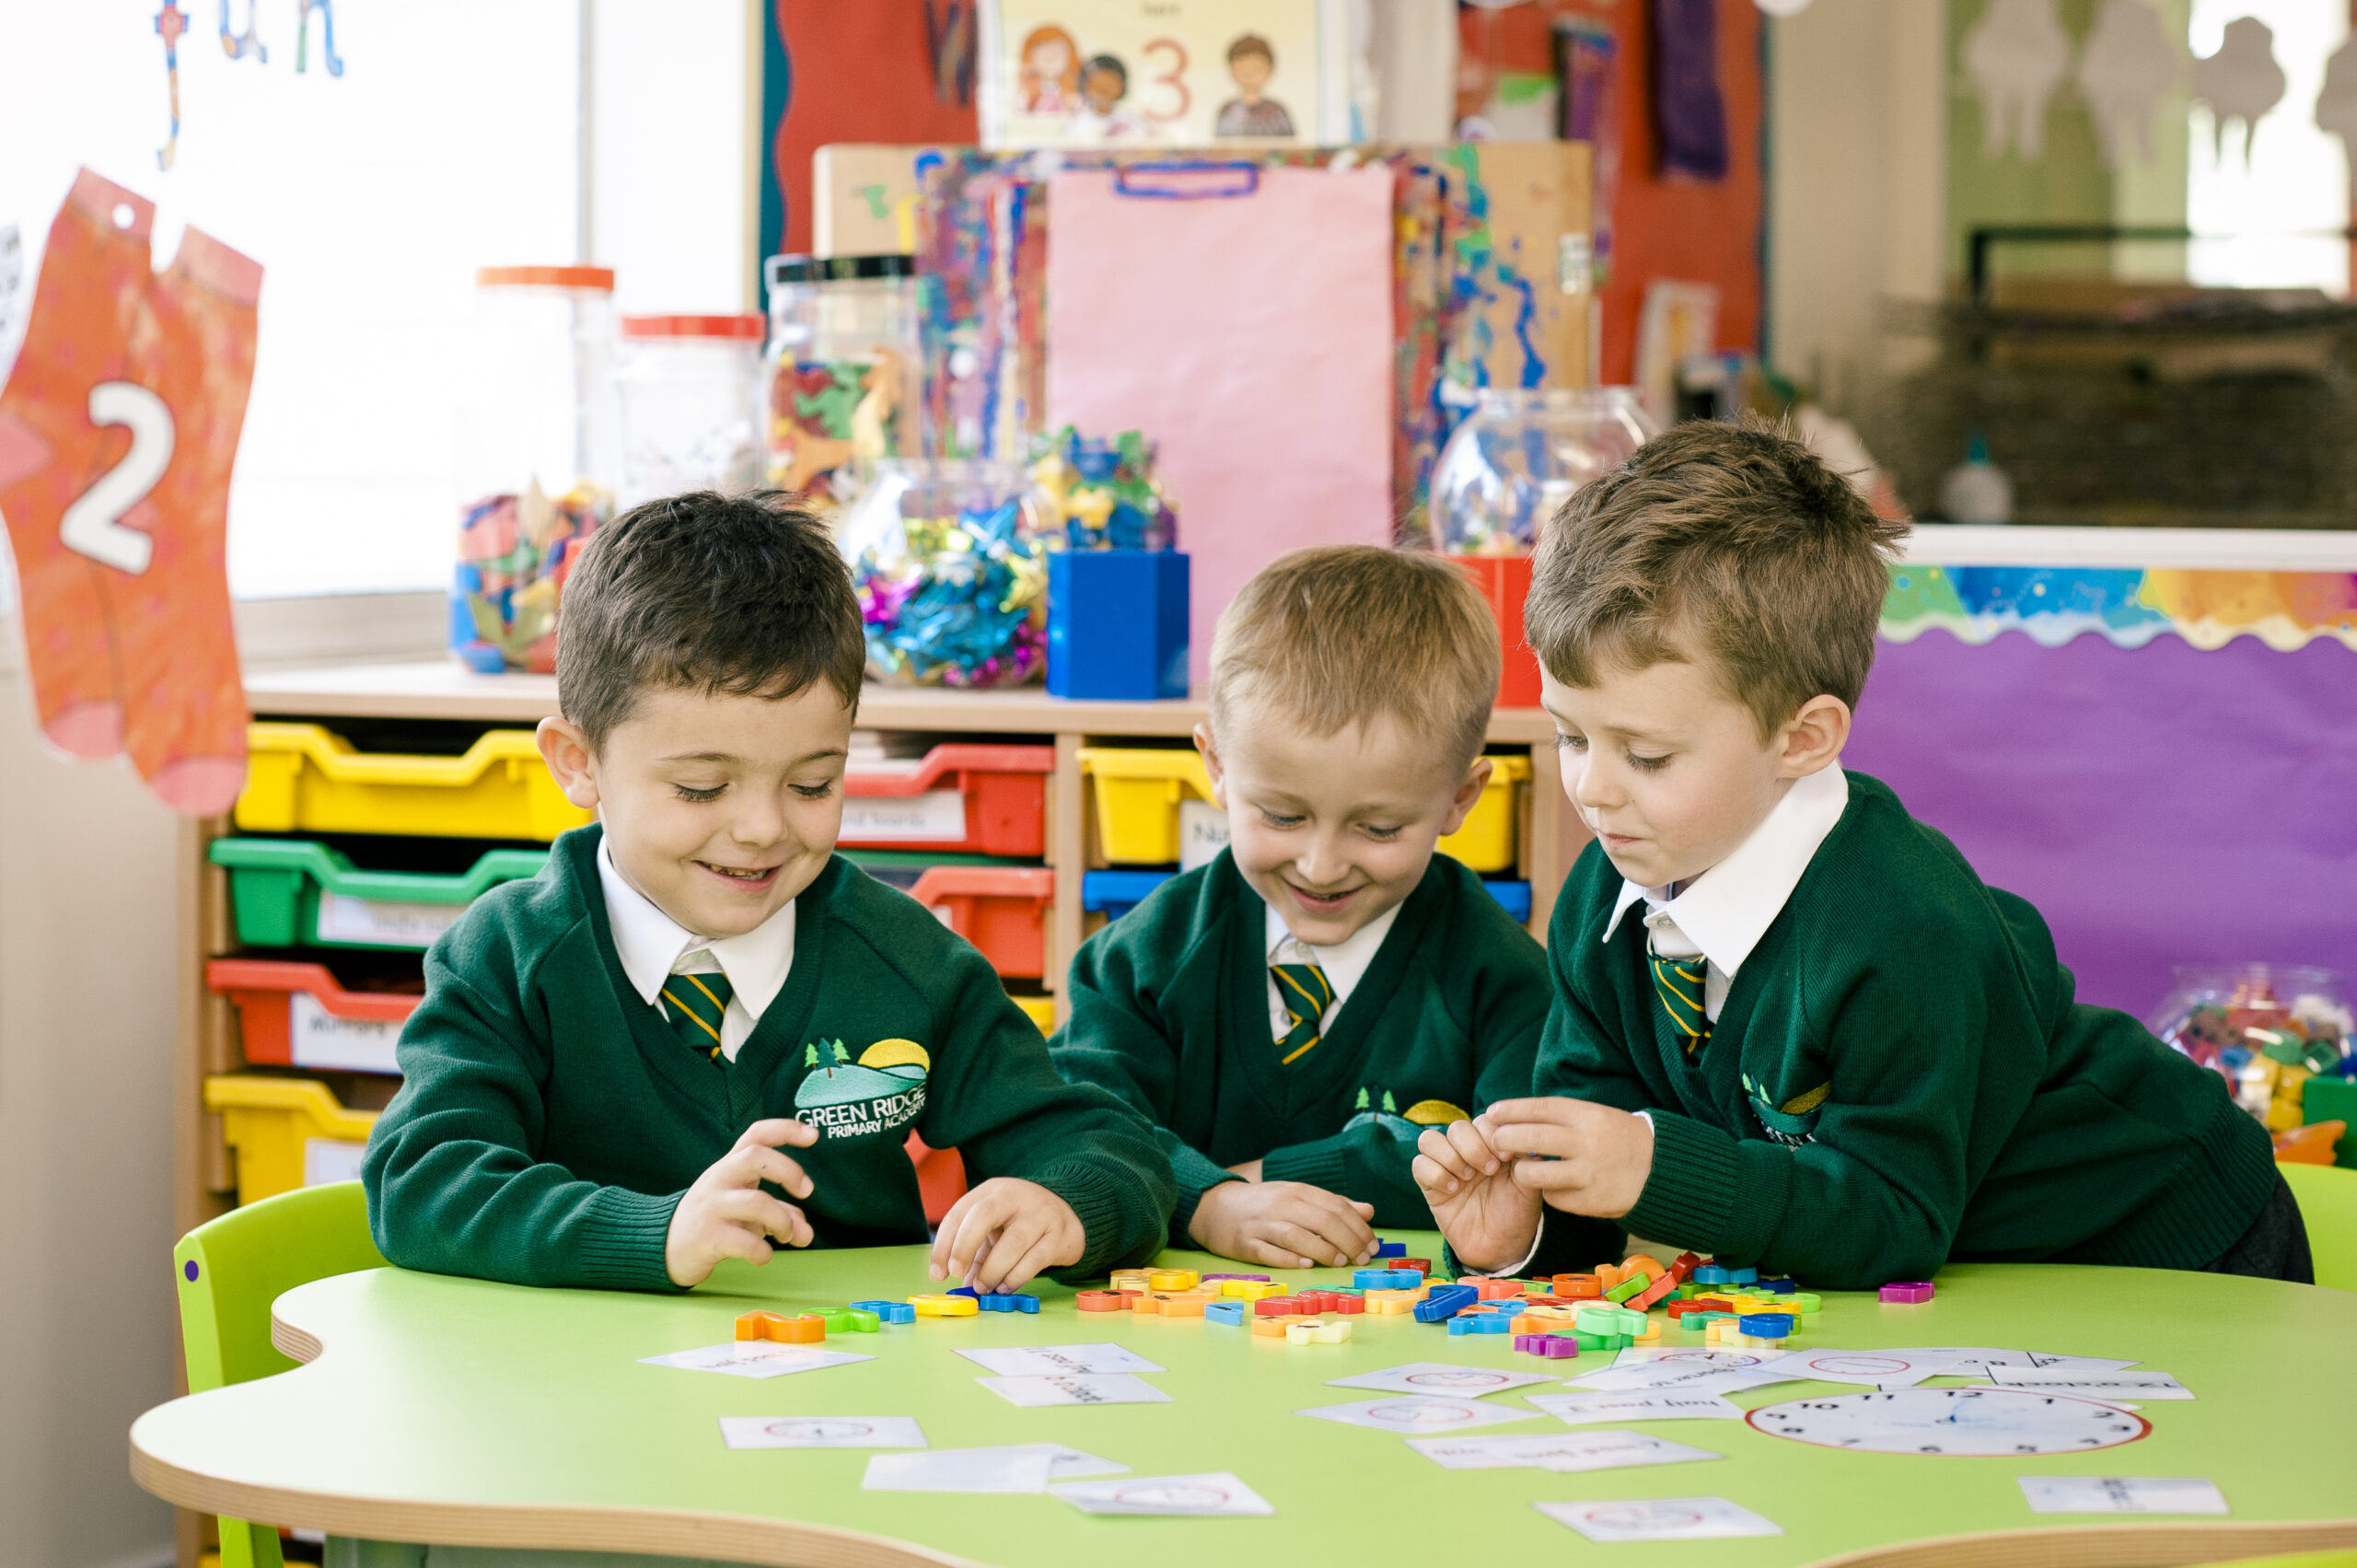 Celebrating World Children’s Day by highlighting Gold Accreditation at Greenridge Primary Academy